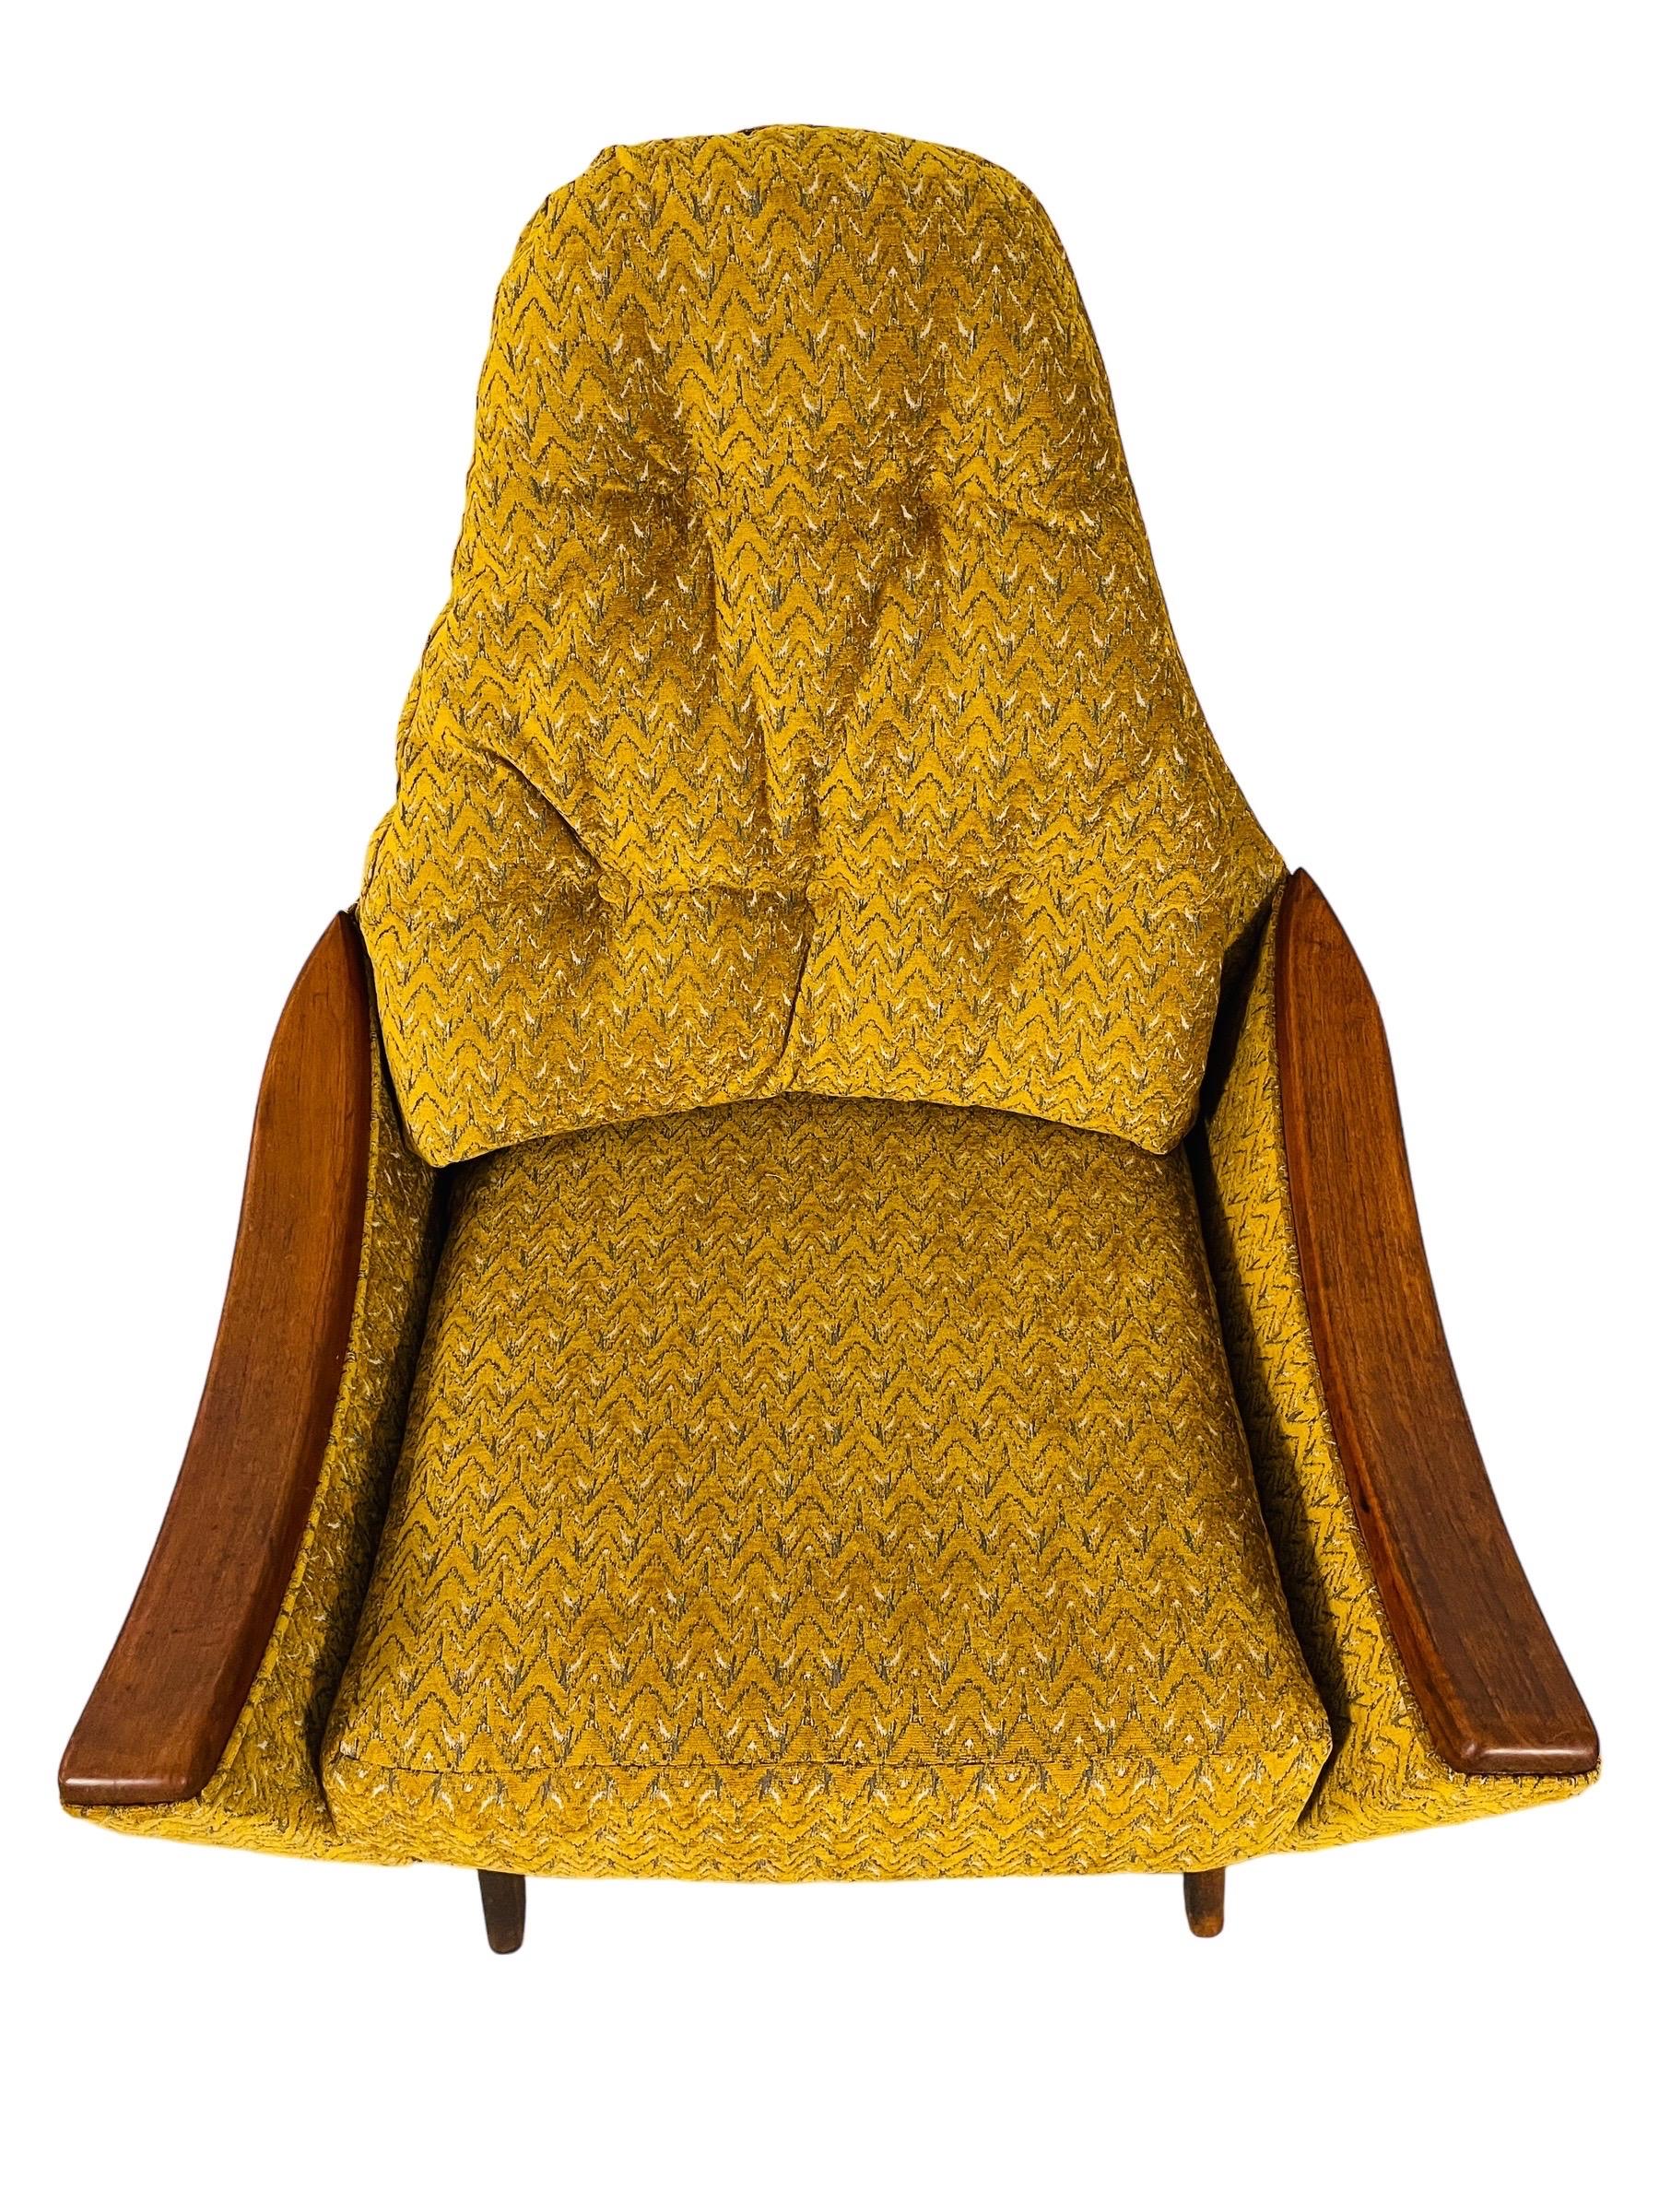 adrian pearsall chair